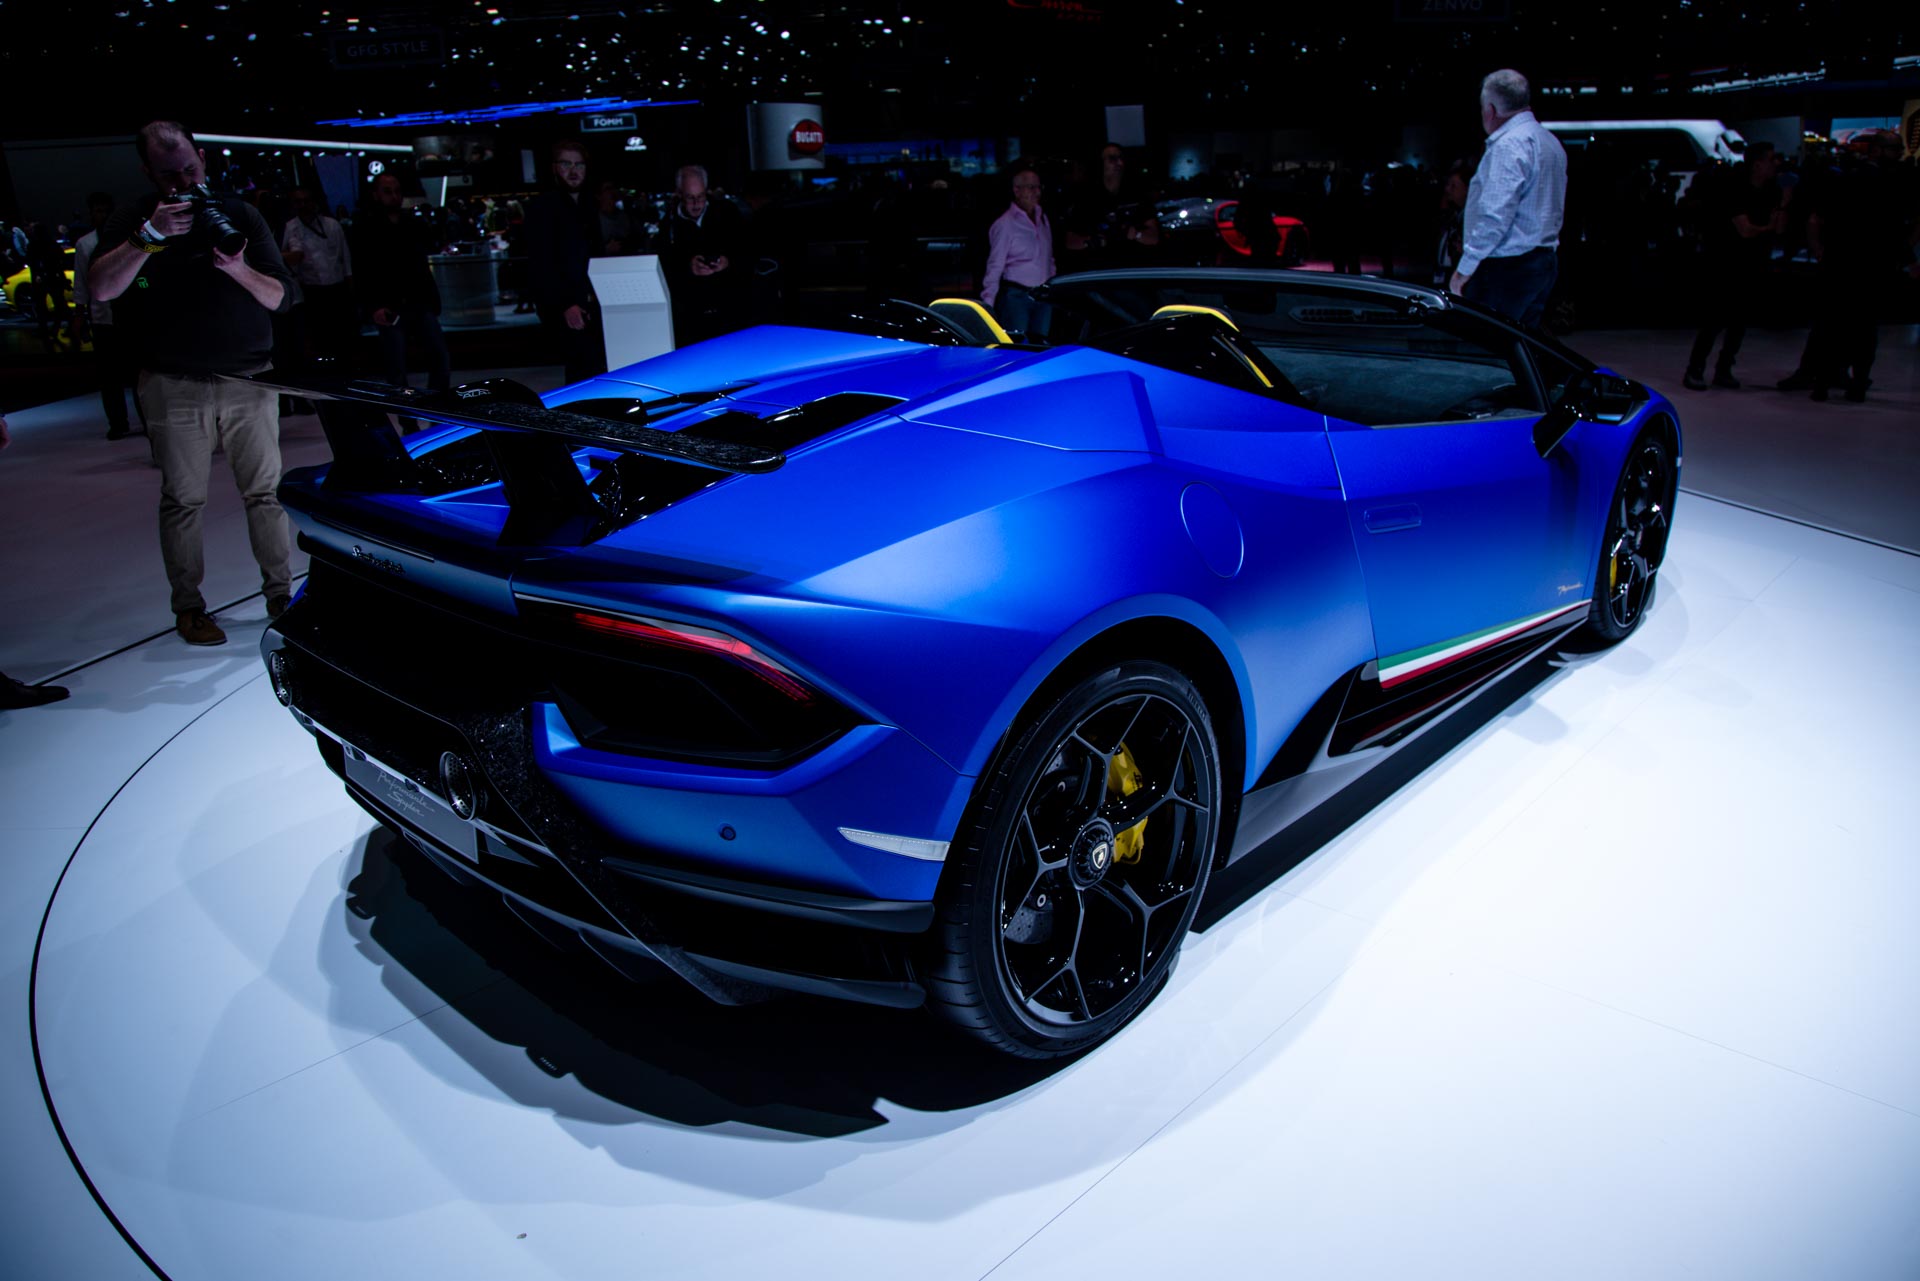 Lamborghini at the Geneva Motor Show 2018 - GTspirit